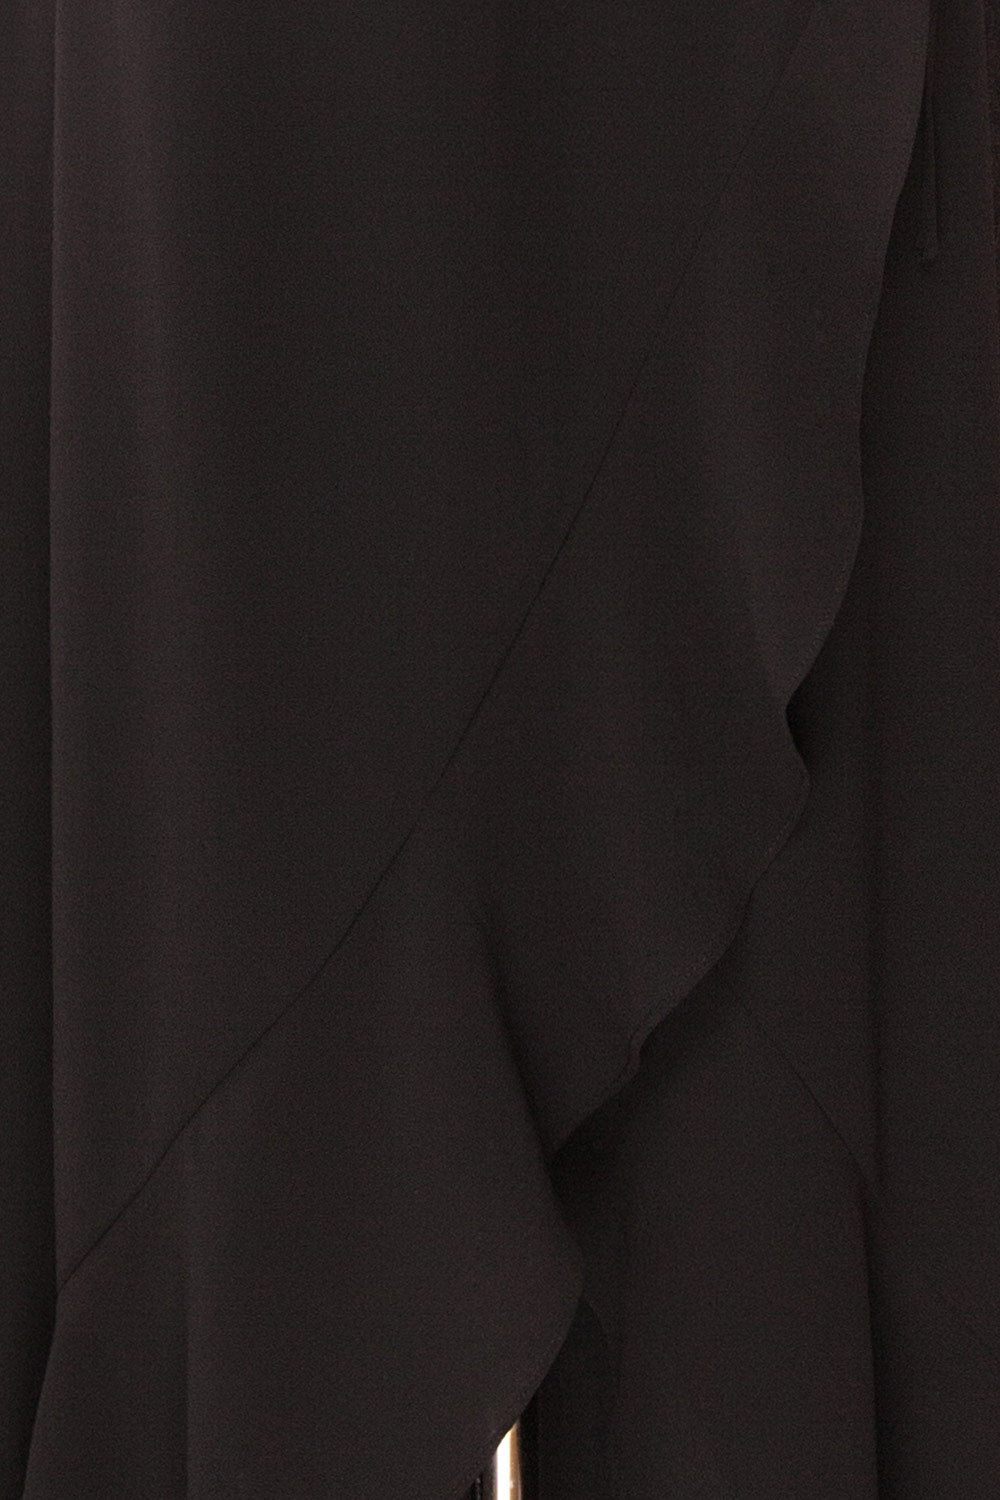 Destry Noire Black Ruffled High-Low Maxi Wrap Dress fabric close up | Boudoir 1861